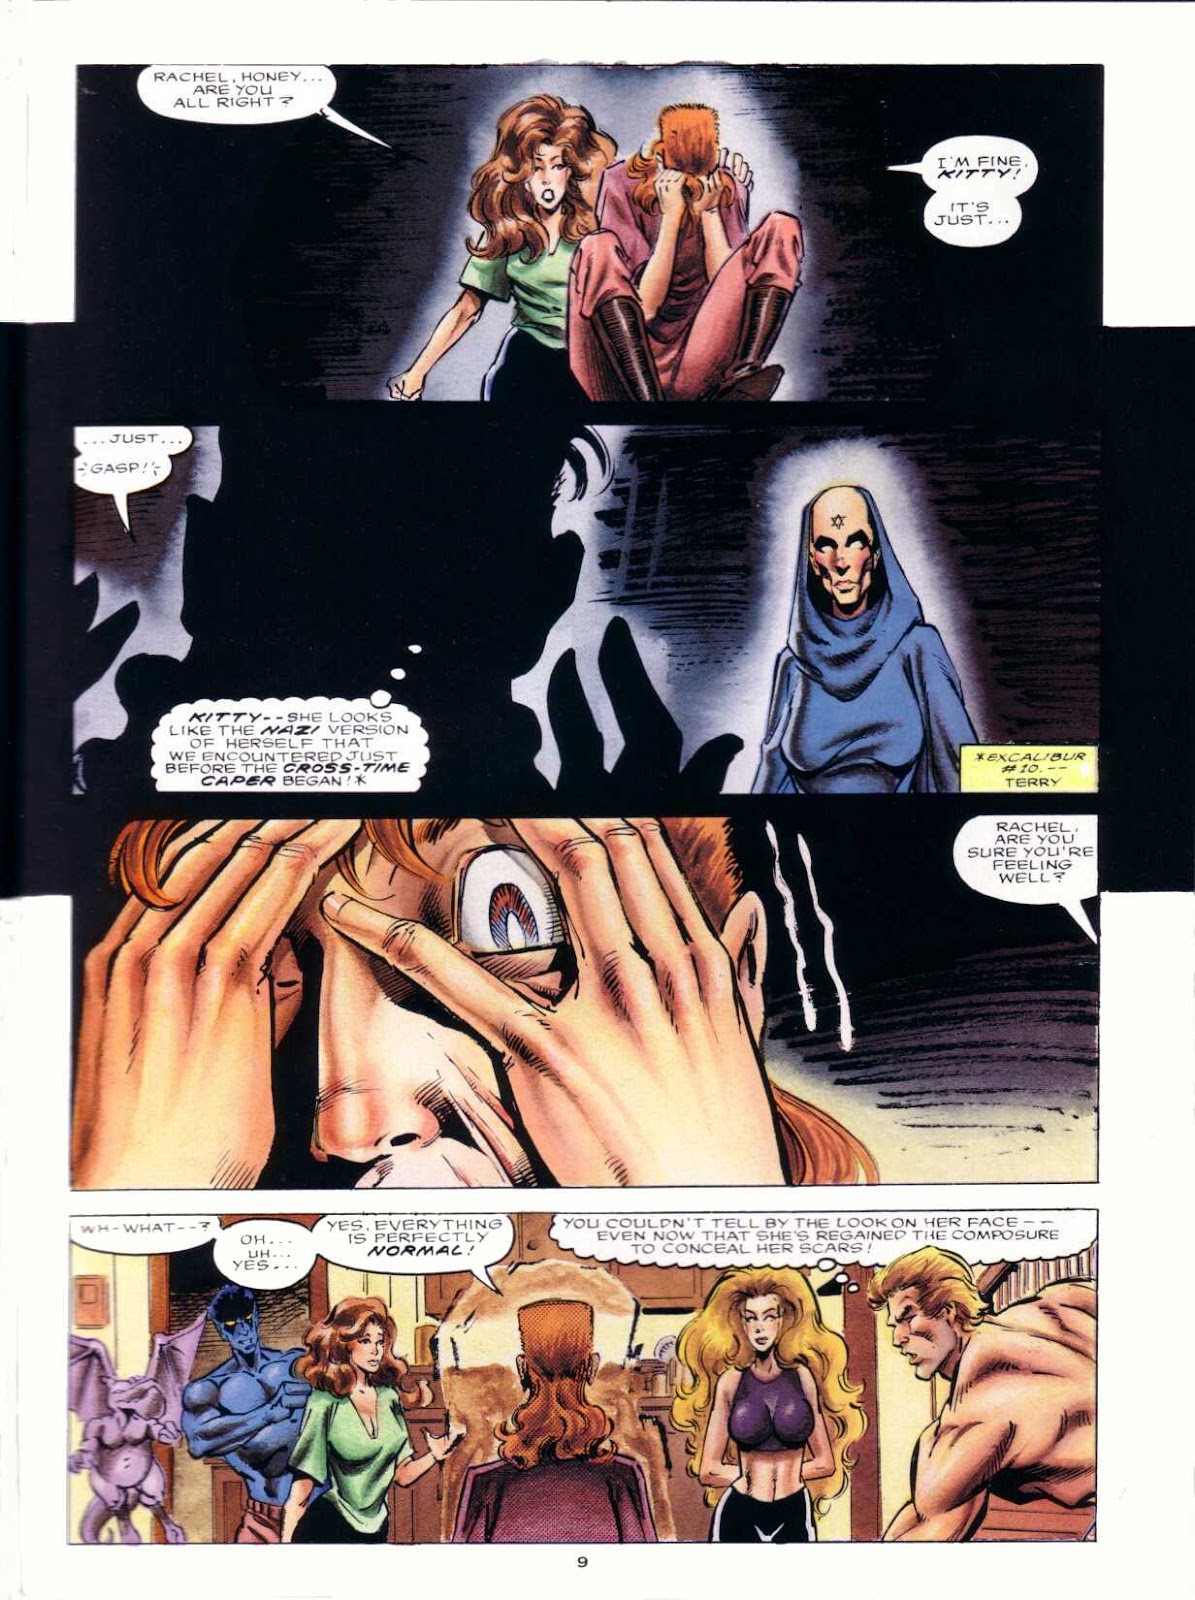 Marvel Graphic Novel issue 66 - Excalibur - Weird War III - Page 9